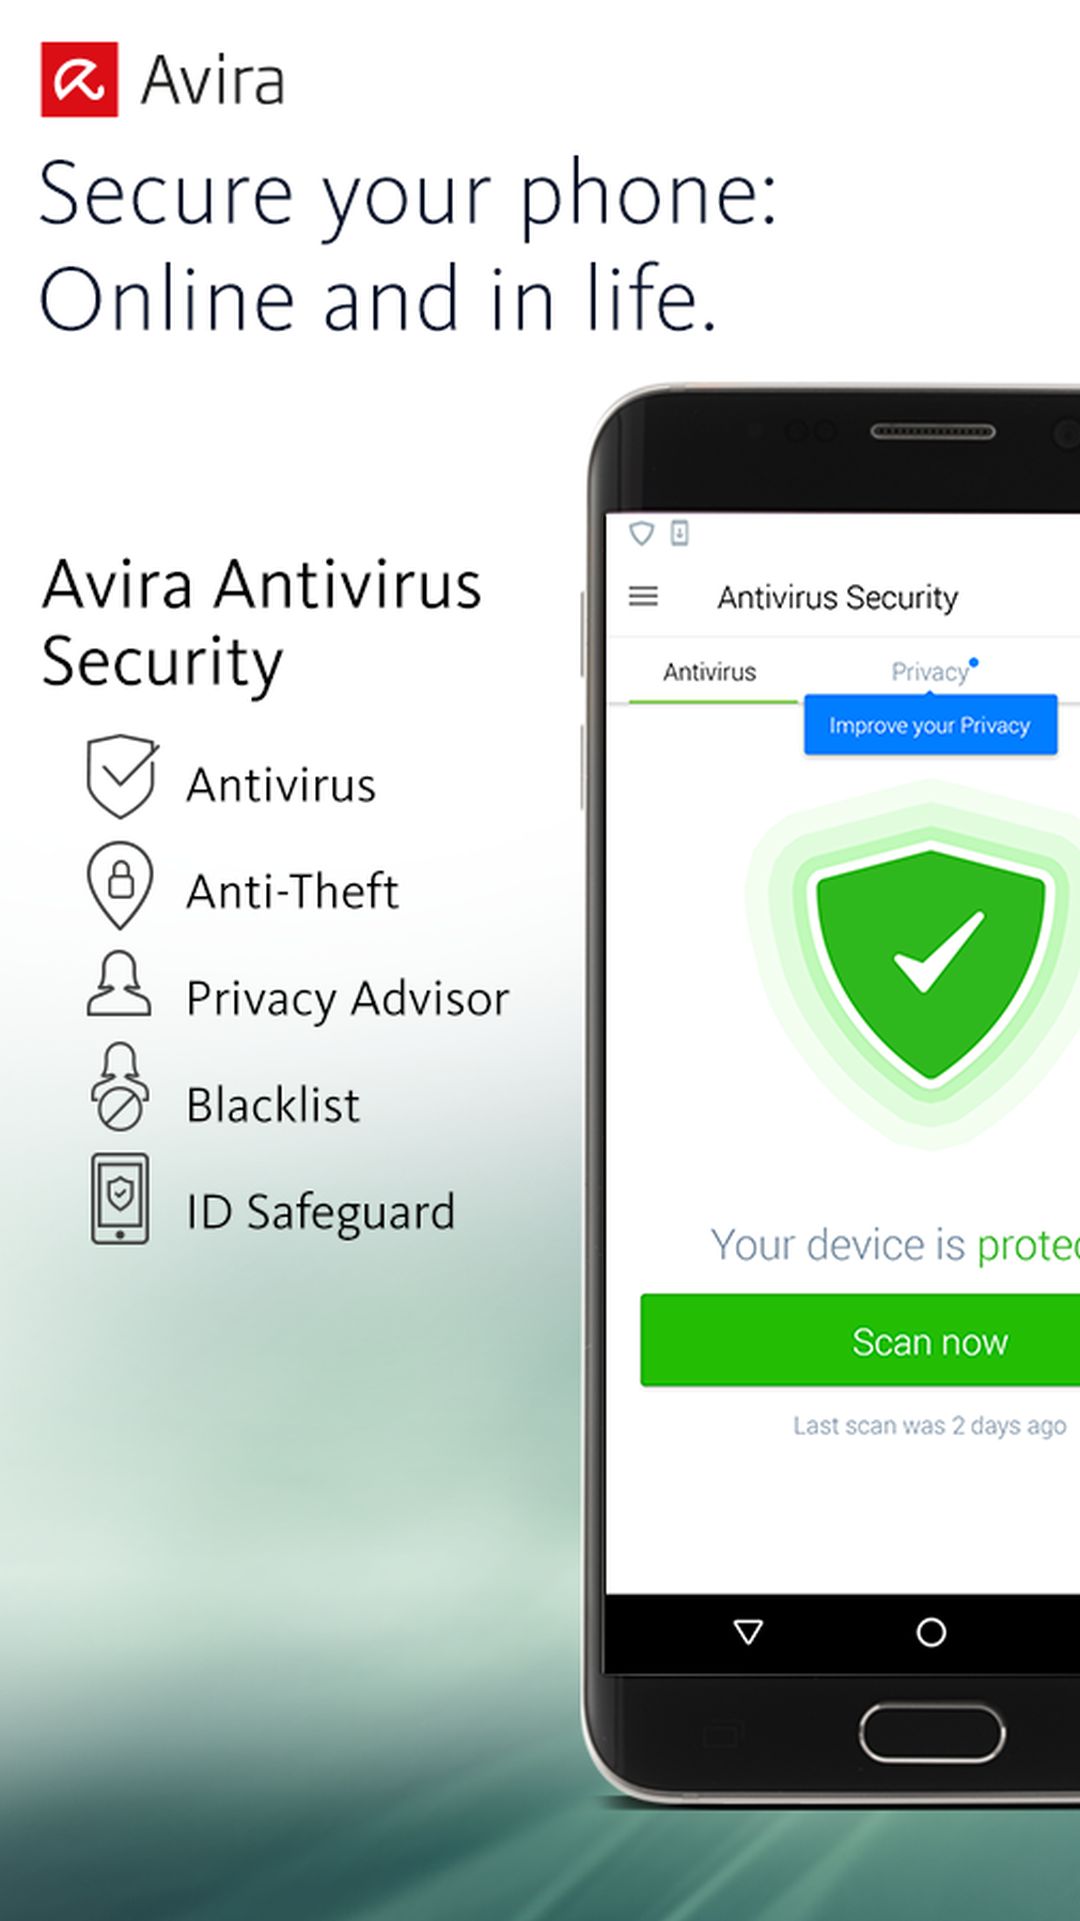 Avira Antivirus Security for Android